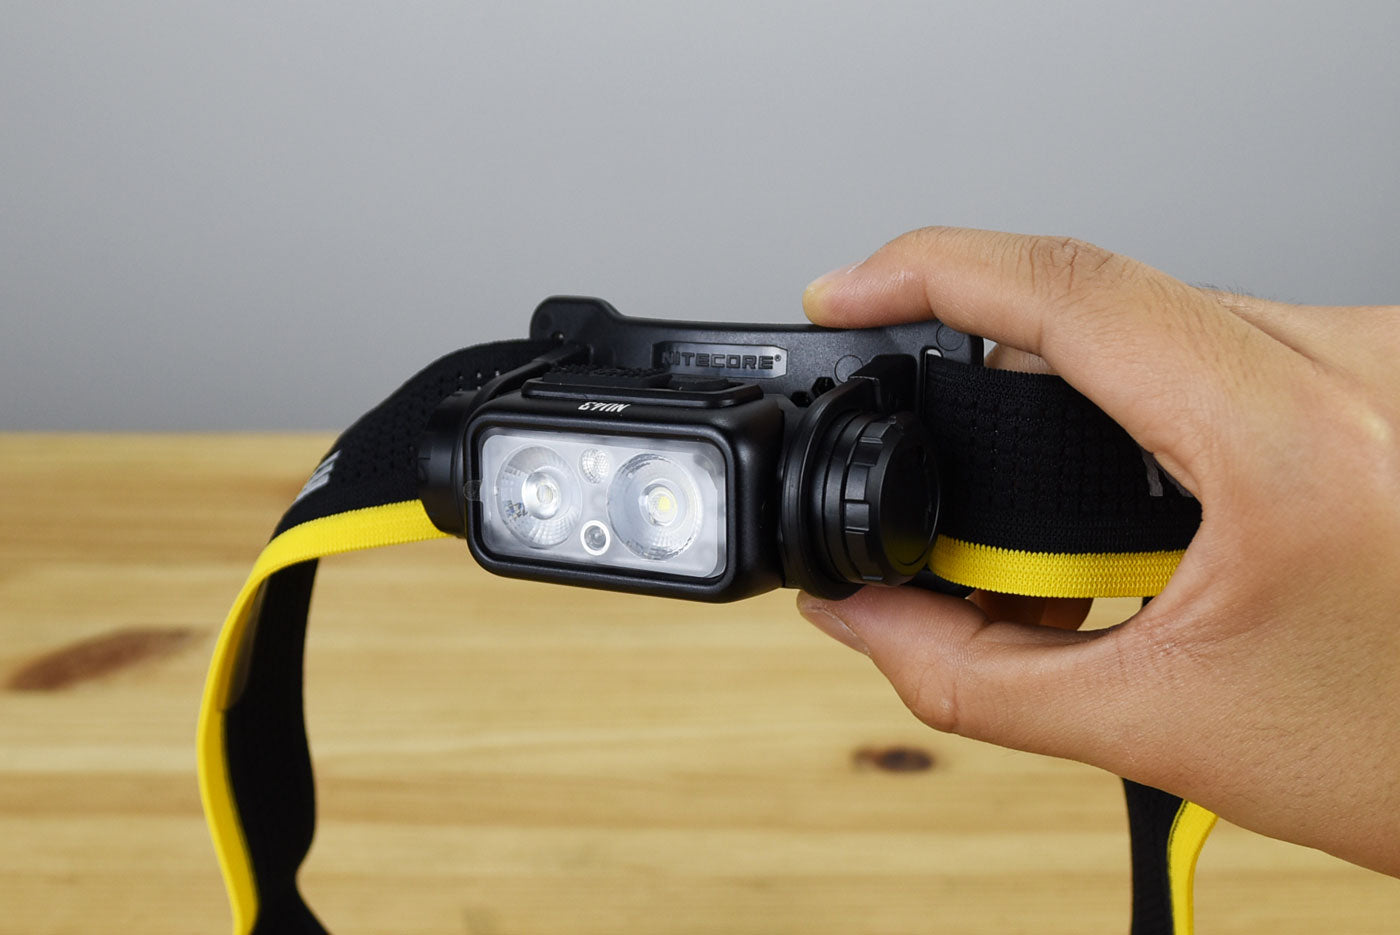 Nitecore NU43 Spotlight + Floodlight Rechargeable Headlamp (1400 Lumens)